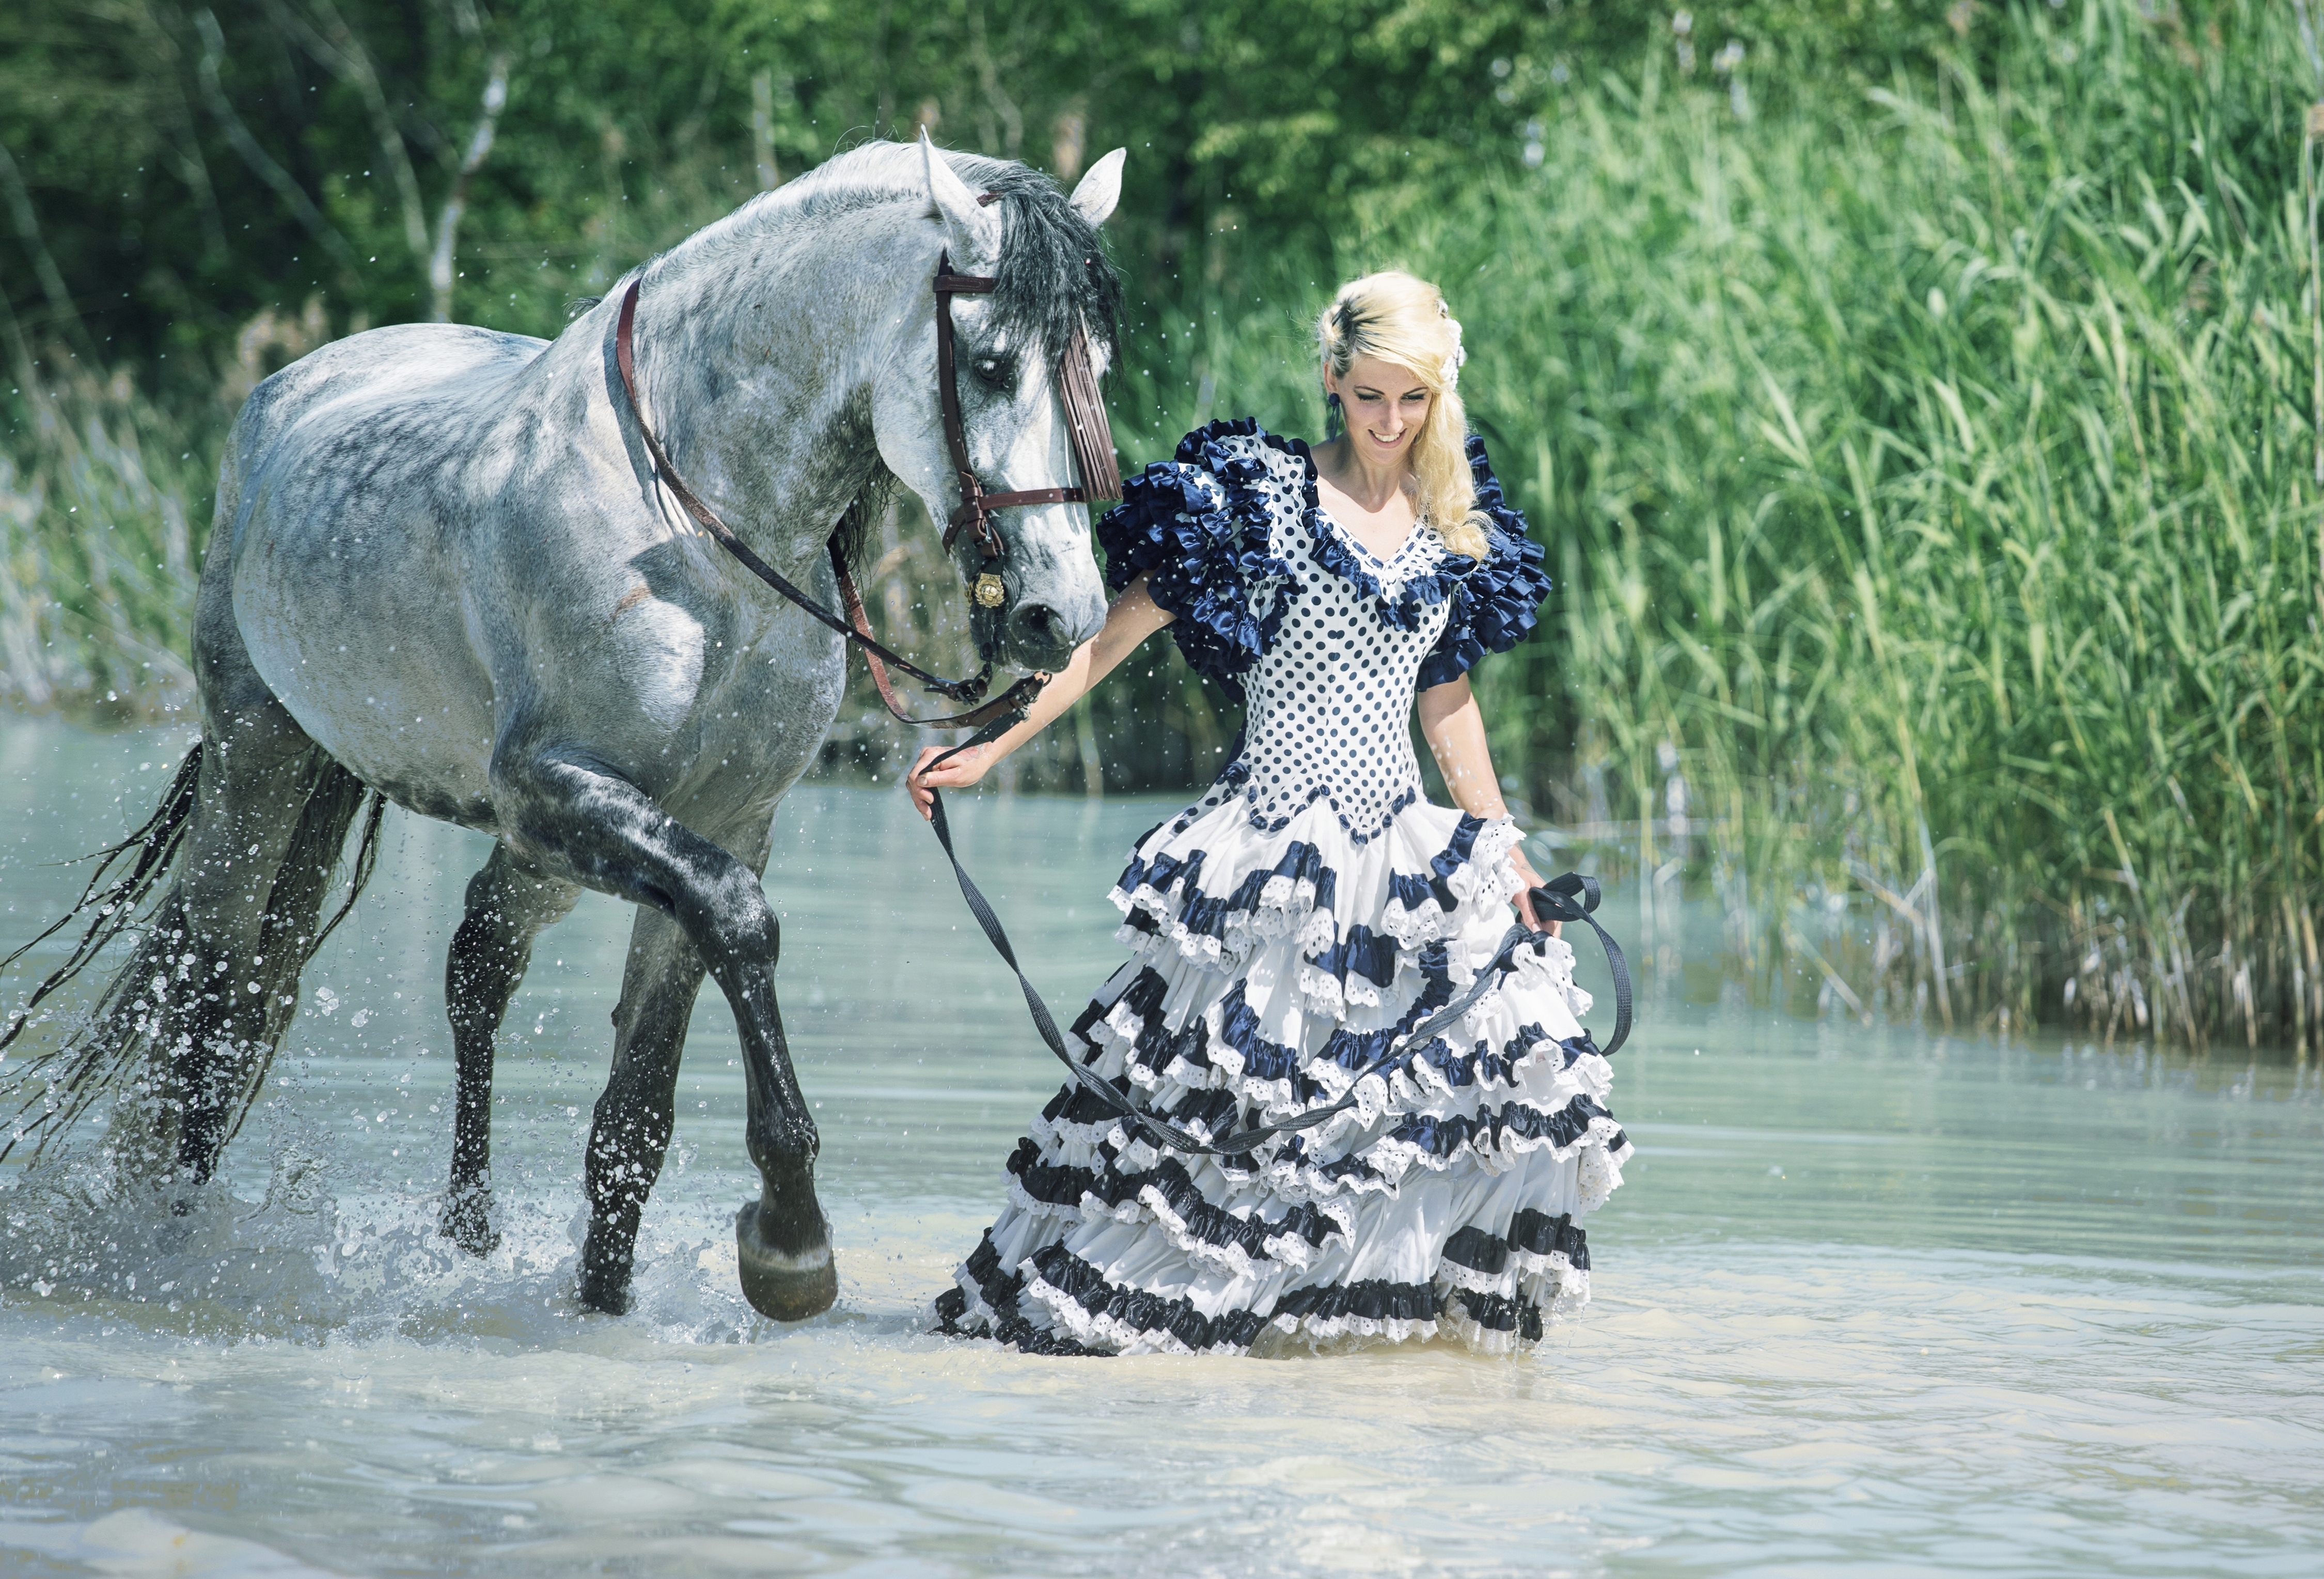 Image: Girl, horse, water, river, walk, grass, dress, sunny day